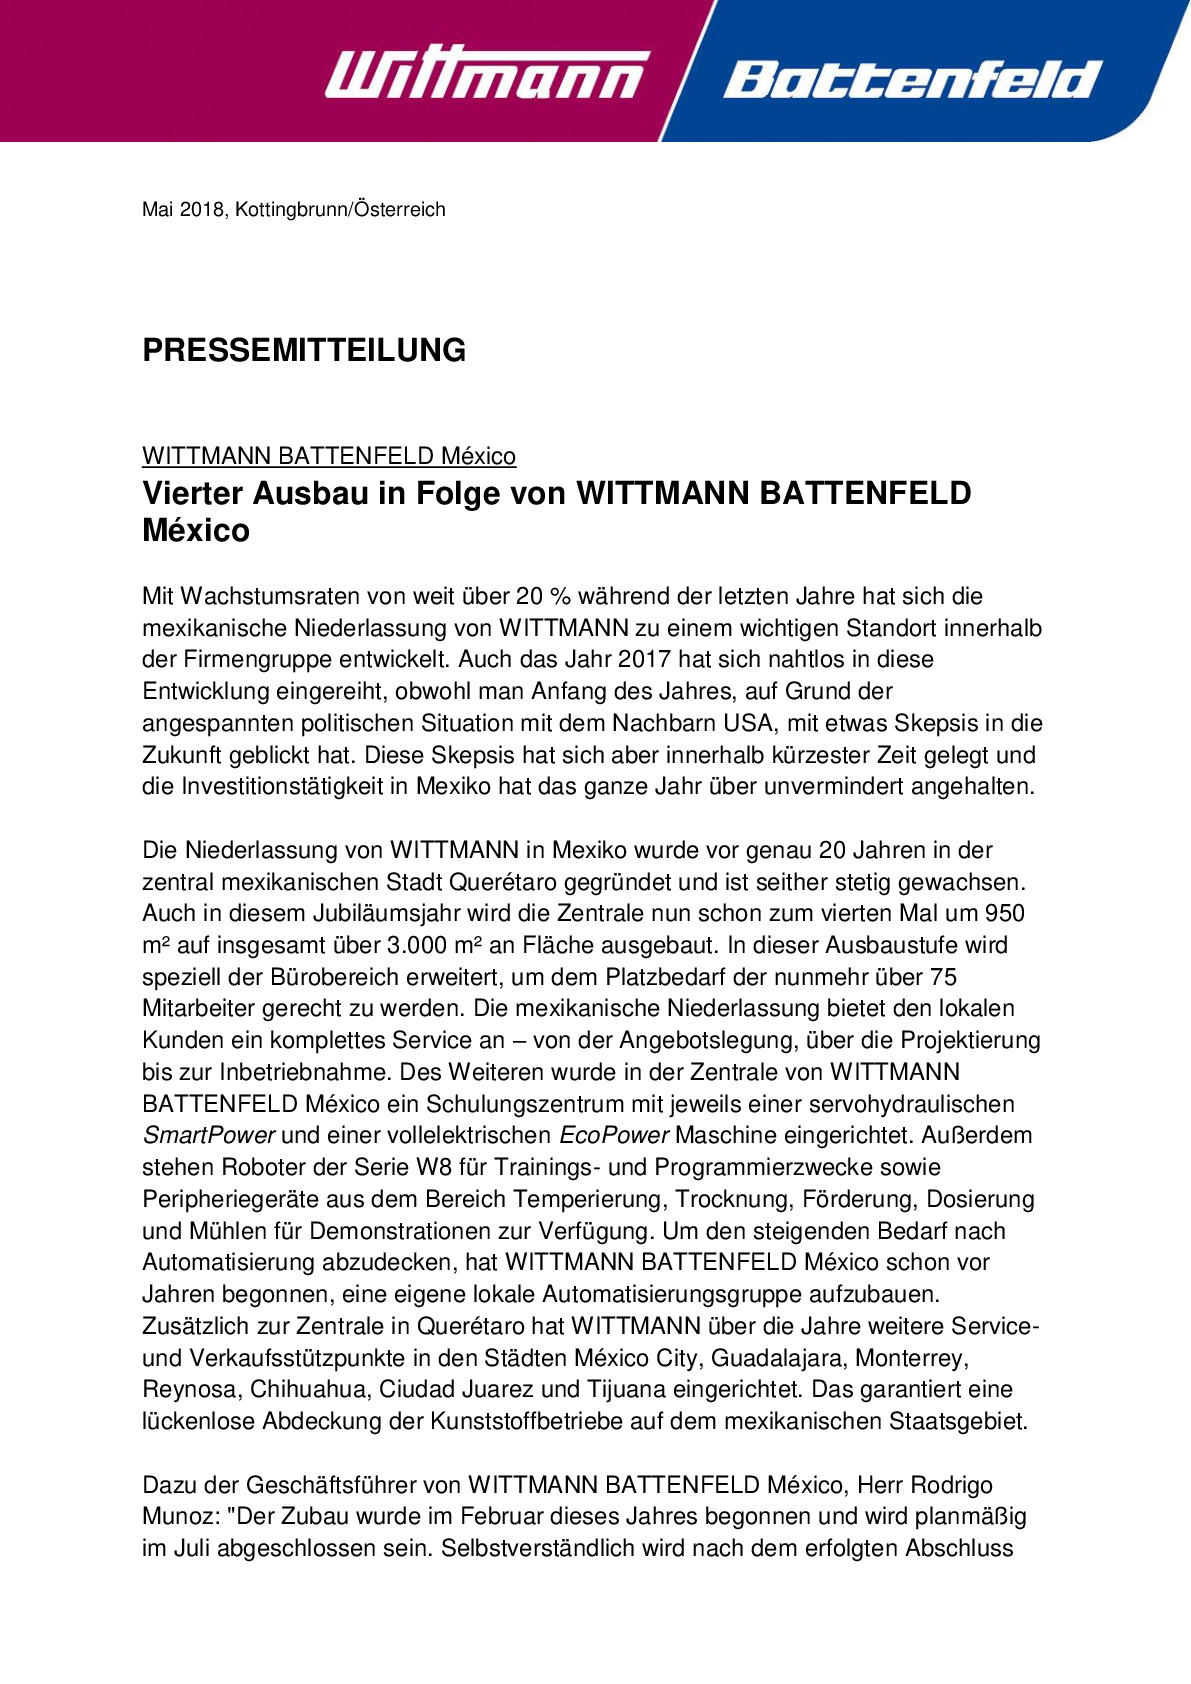 wiba-pm-07-2018_wittmann_battenfeld_mexico_de